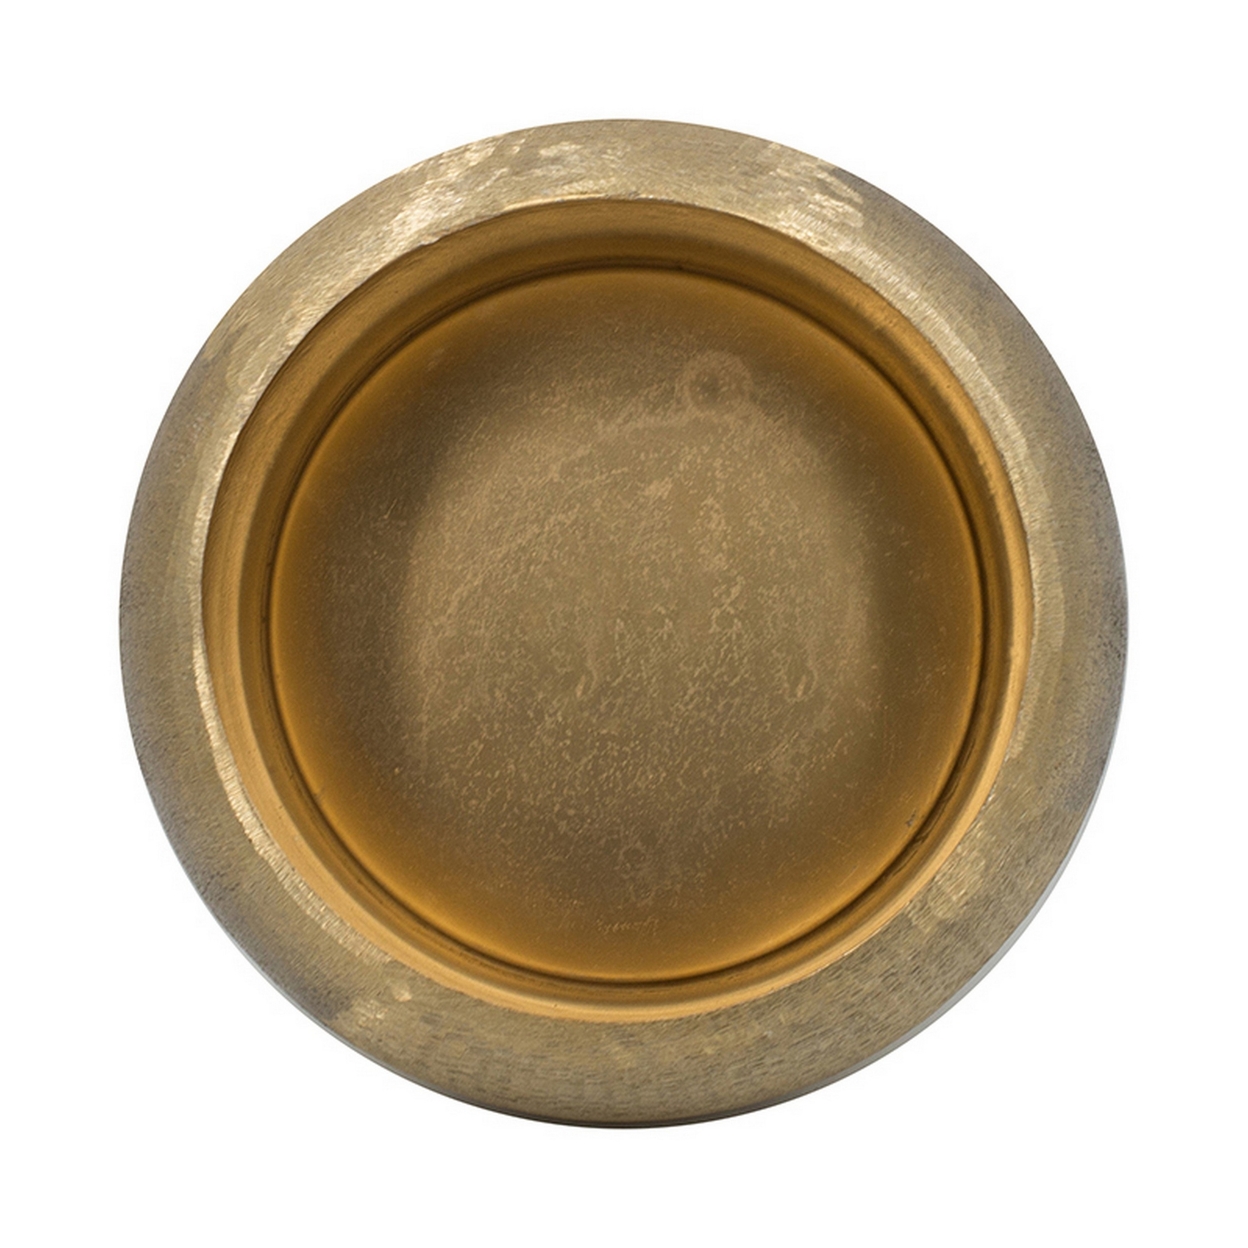 2 Piece Rounded Decorative Bowls, Gold Metal Hammered Texture, Wide Ingress- Saltoro Sherpi